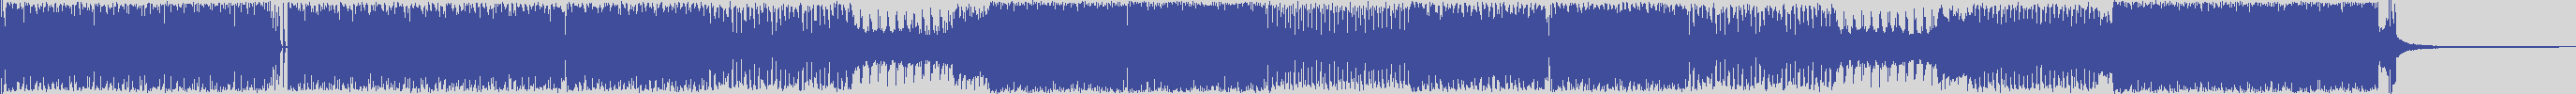 atomic_recordings [AR005] Roby Montano - Oh La Love Is [Rob Romano Edit] audio wave form